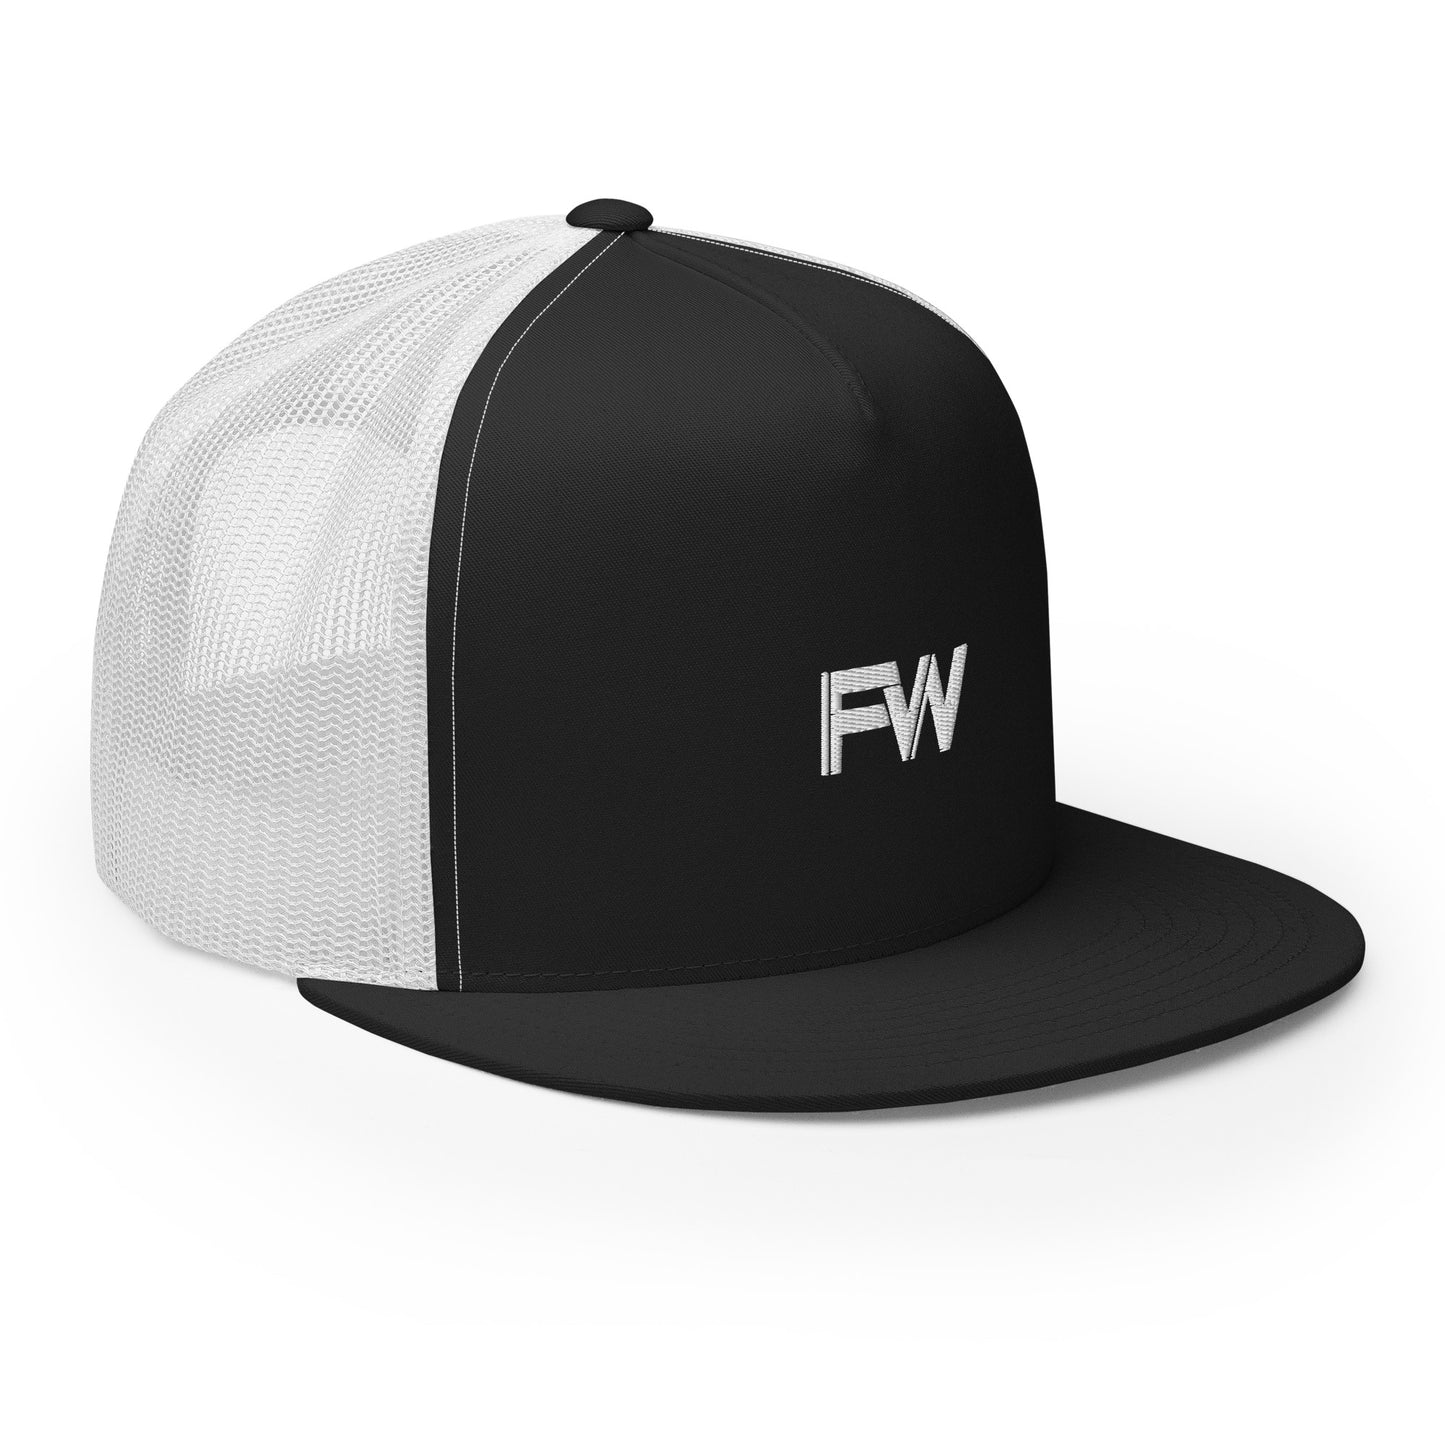 Floyd Williams "FW" Trucker Cap